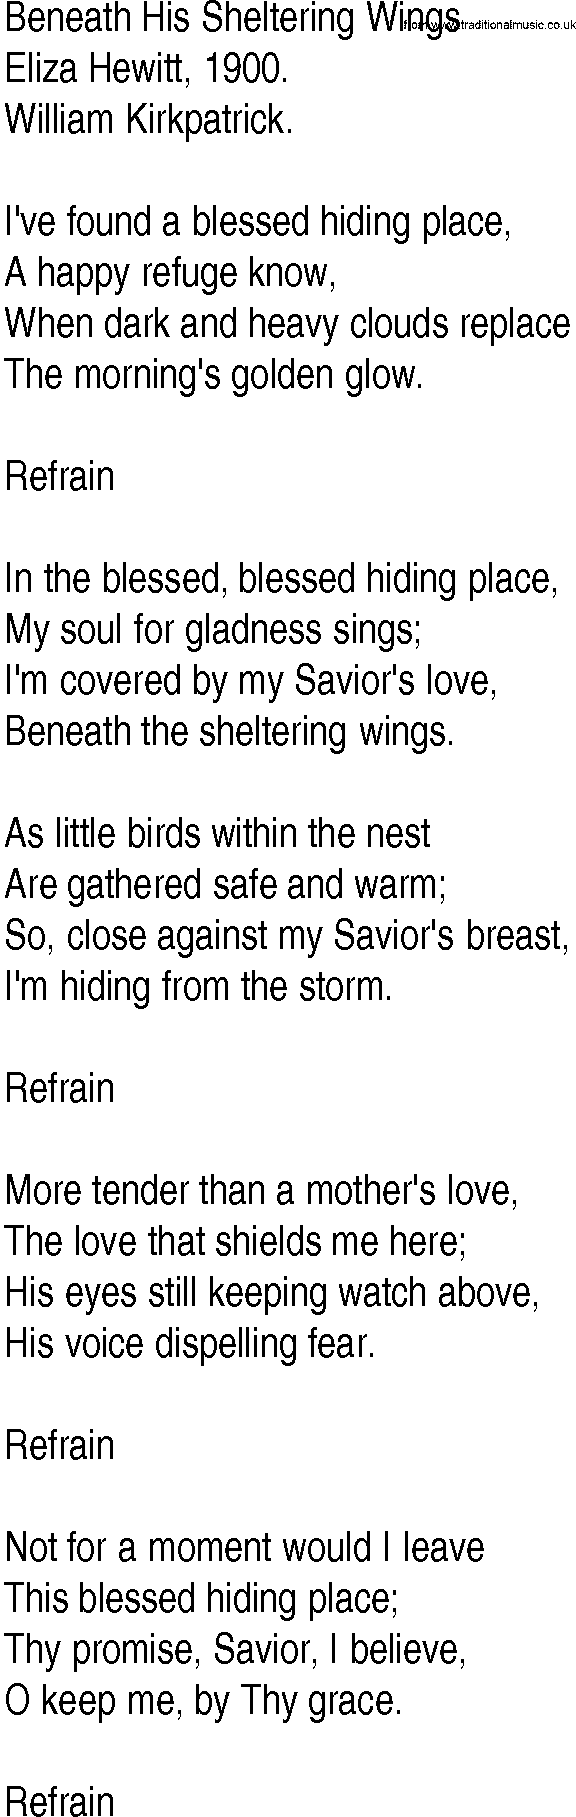 Hymn and Gospel Song: Beneath His Sheltering Wings by Eliza Hewitt lyrics